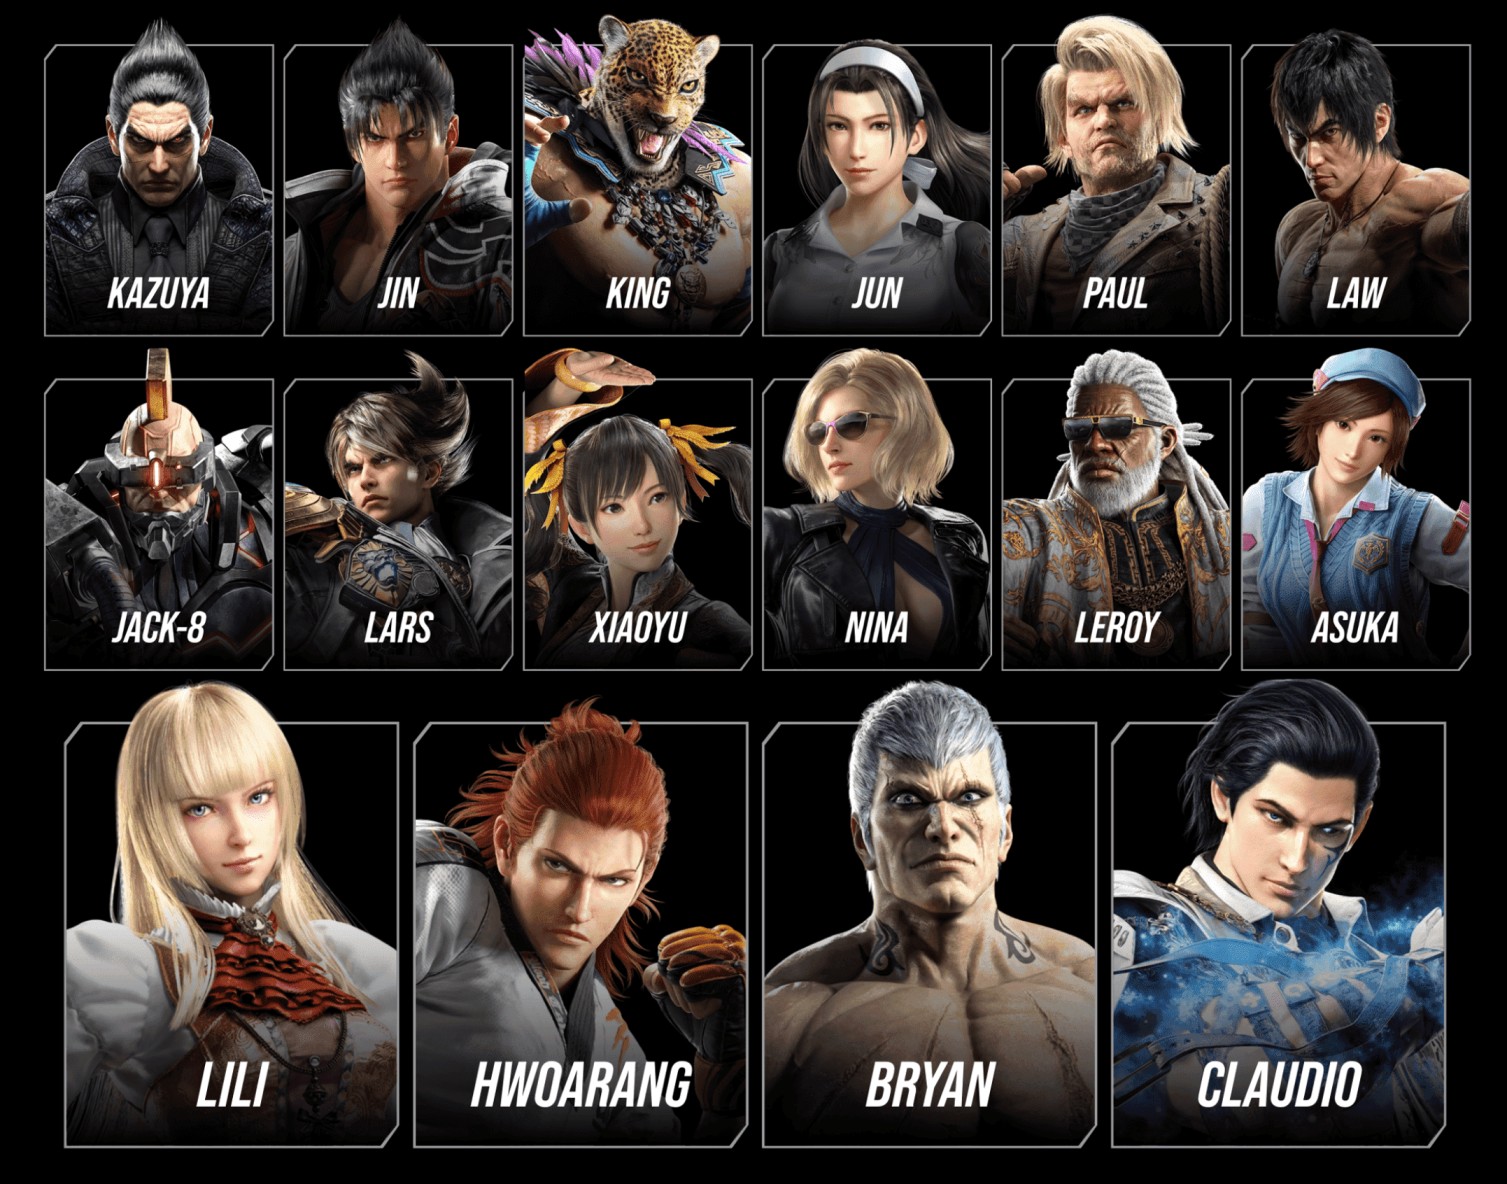 Tekken 8: Release Date, Trailers, Platforms, Characters & more